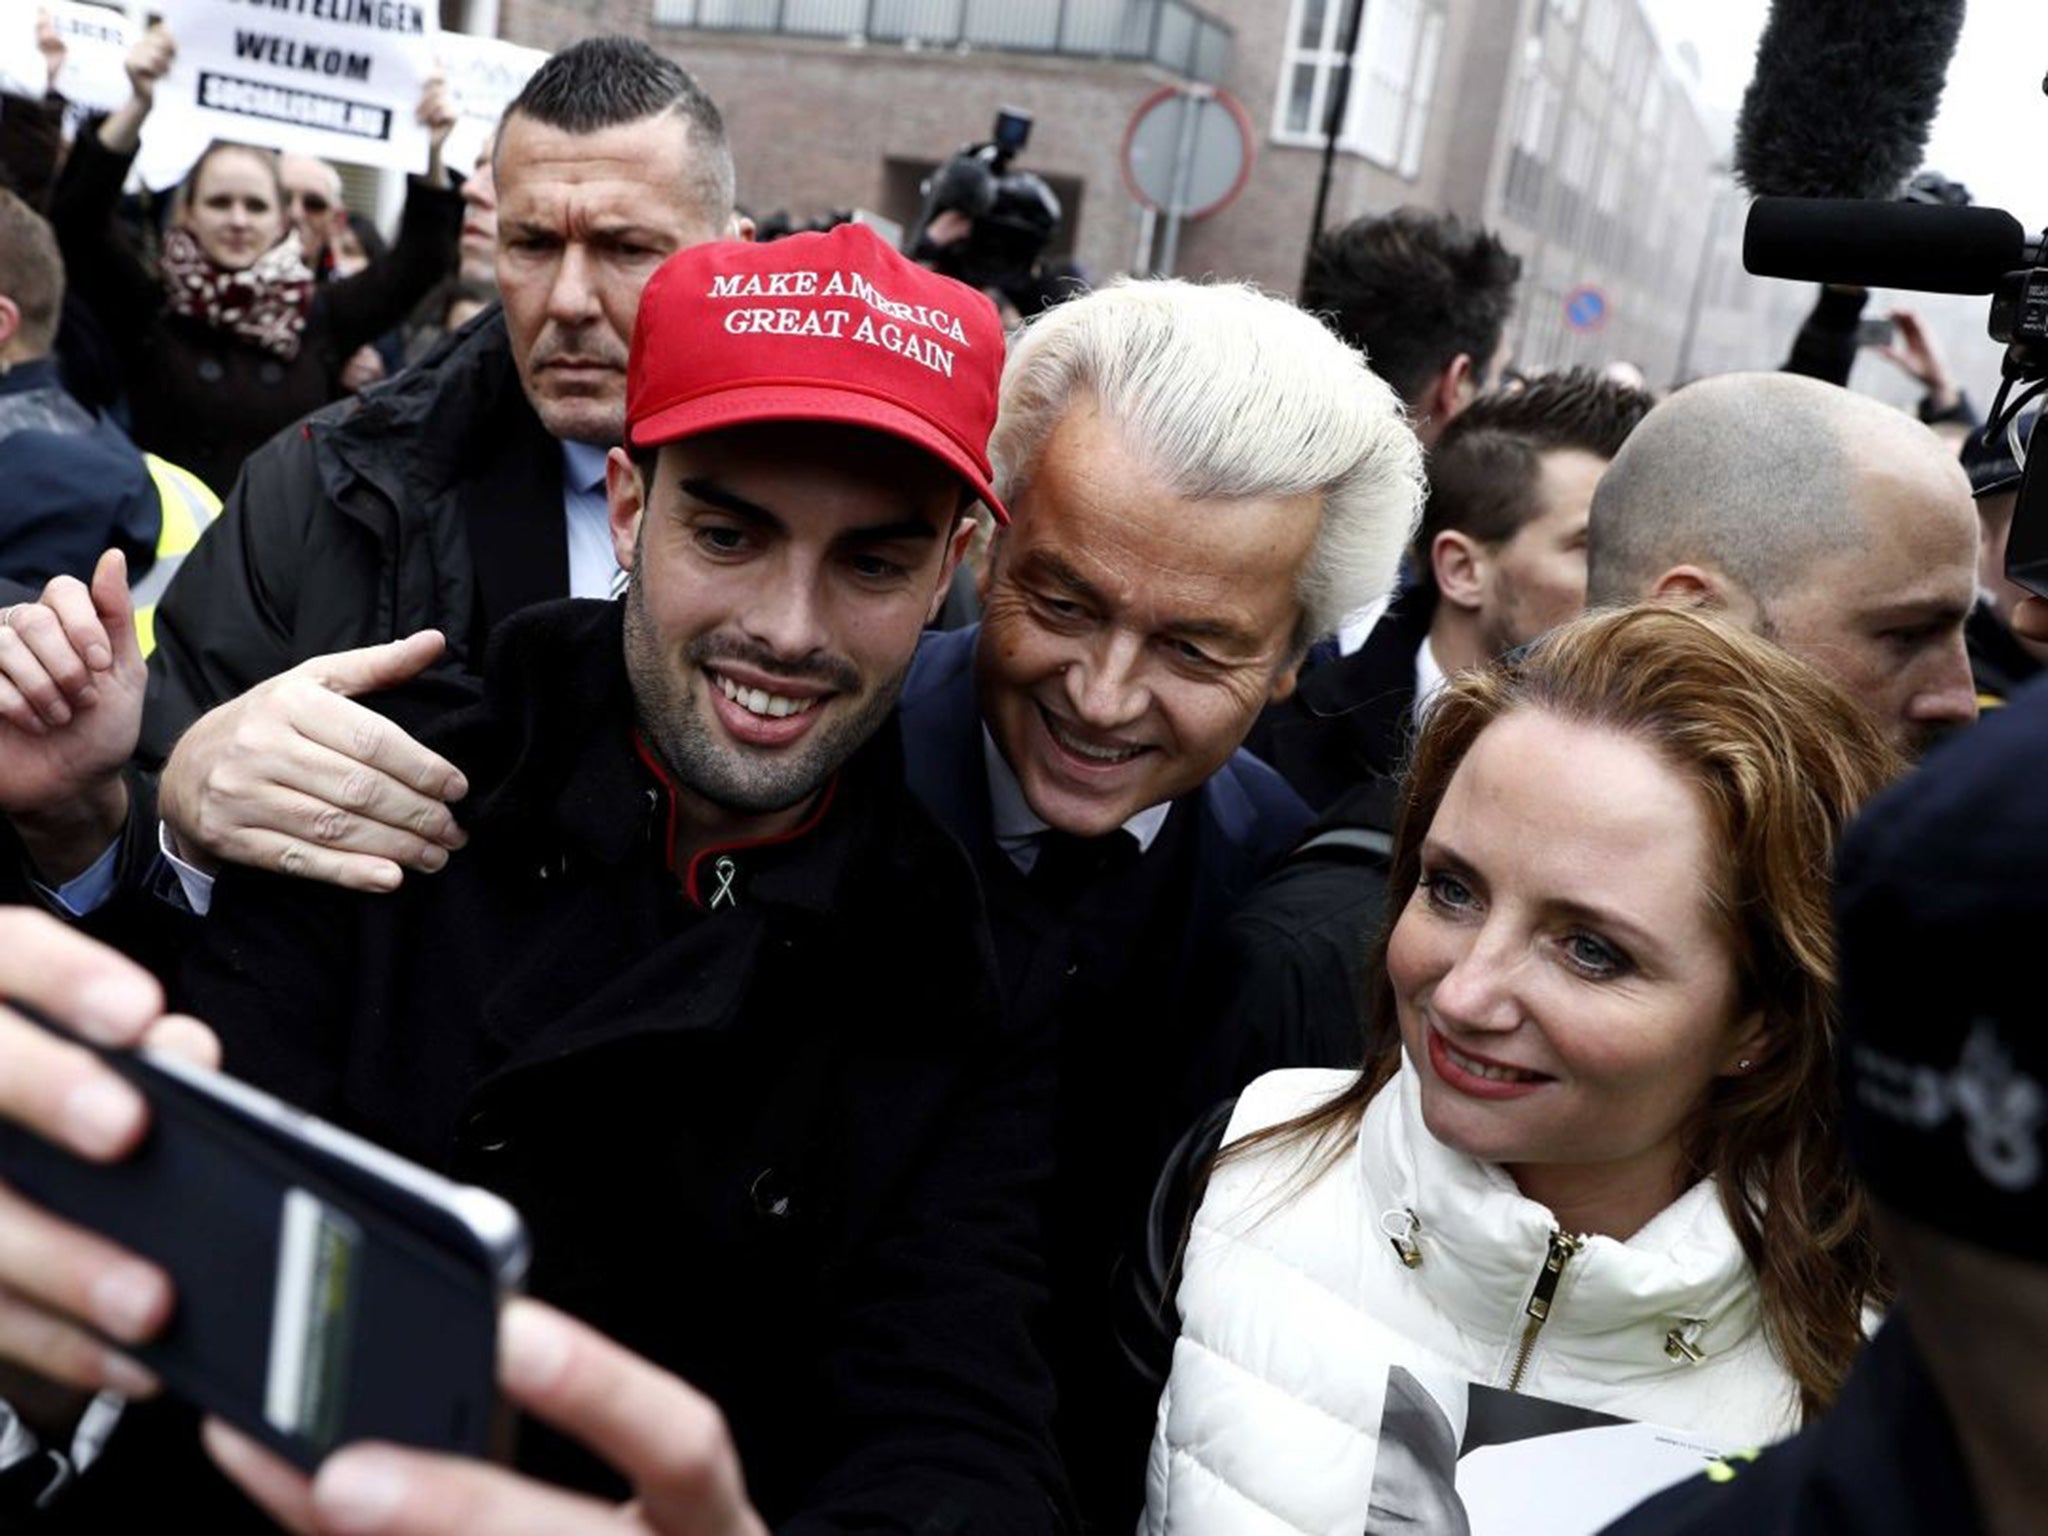 Dutch politician Geert Wilders with a supporter wearing a pro-Donald Trump hat in Spijkenisse